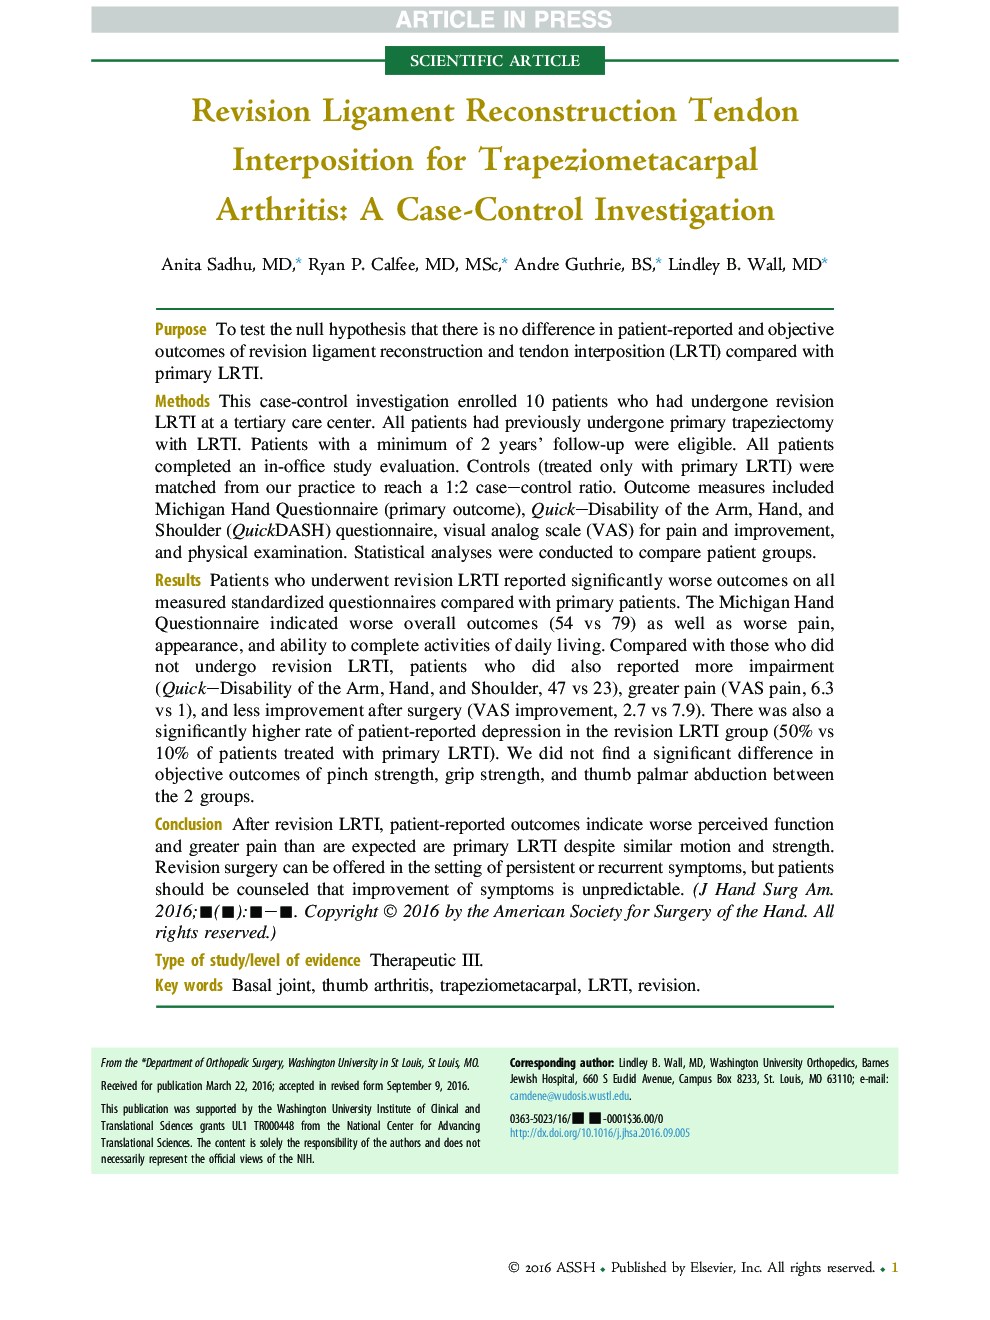 Revision Ligament Reconstruction Tendon Interposition for Trapeziometacarpal Arthritis: A Case-Control Investigation